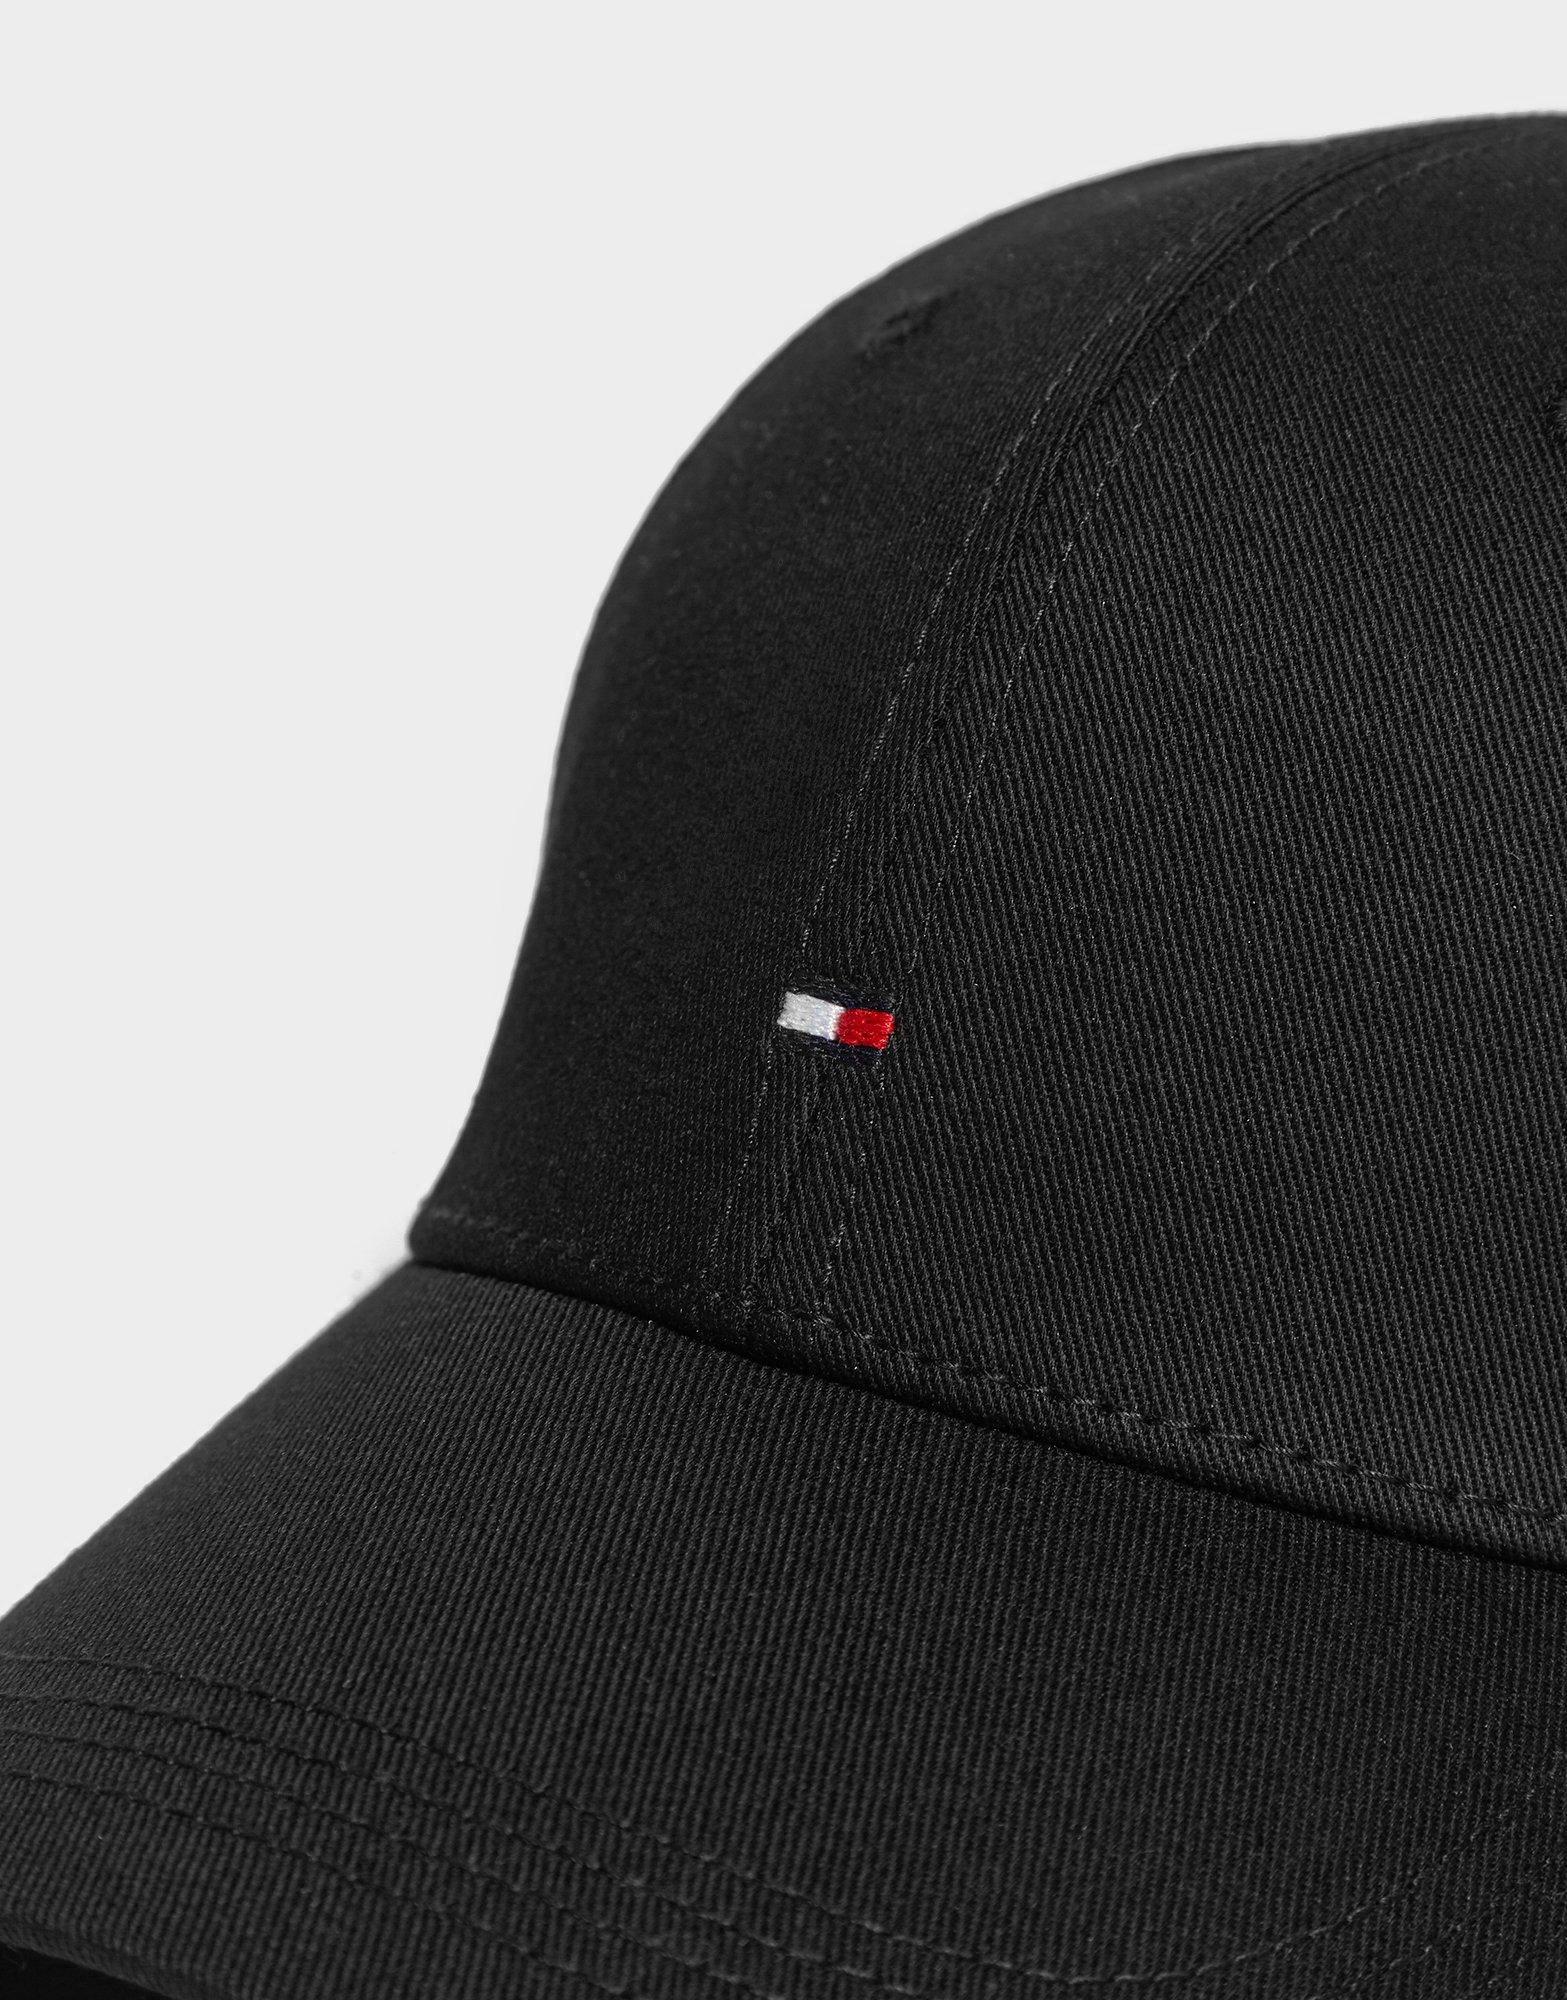 black tommy cap